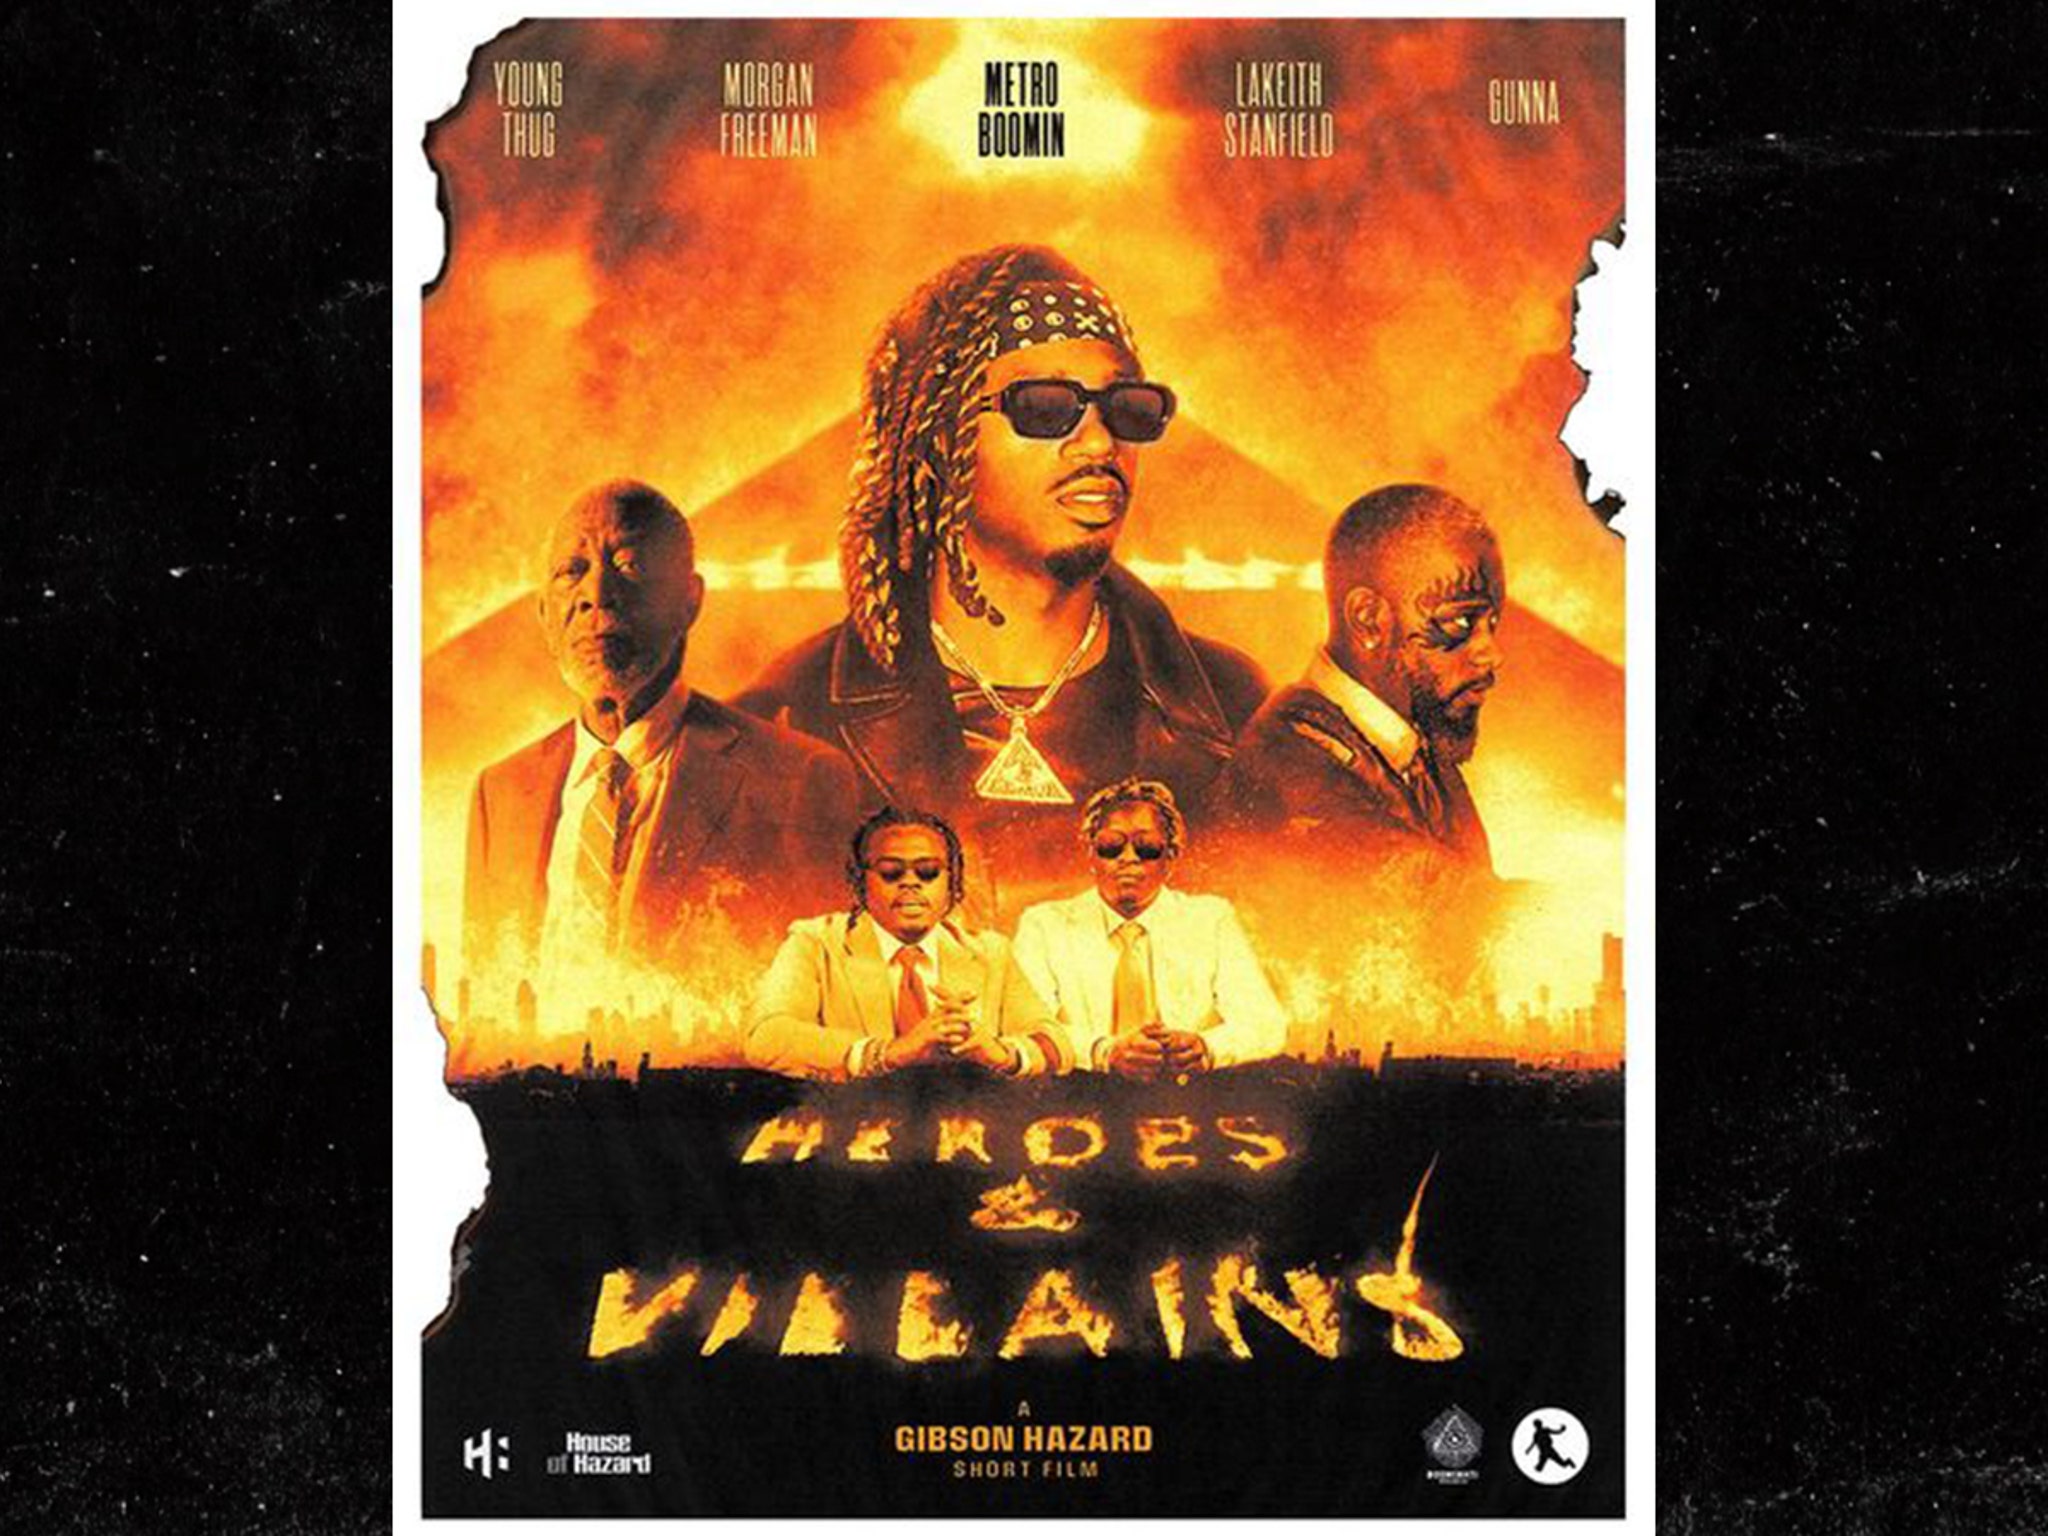 Metro Boomin, Hip-Hop's Truest Superhero: Heroes and Villains Album Review